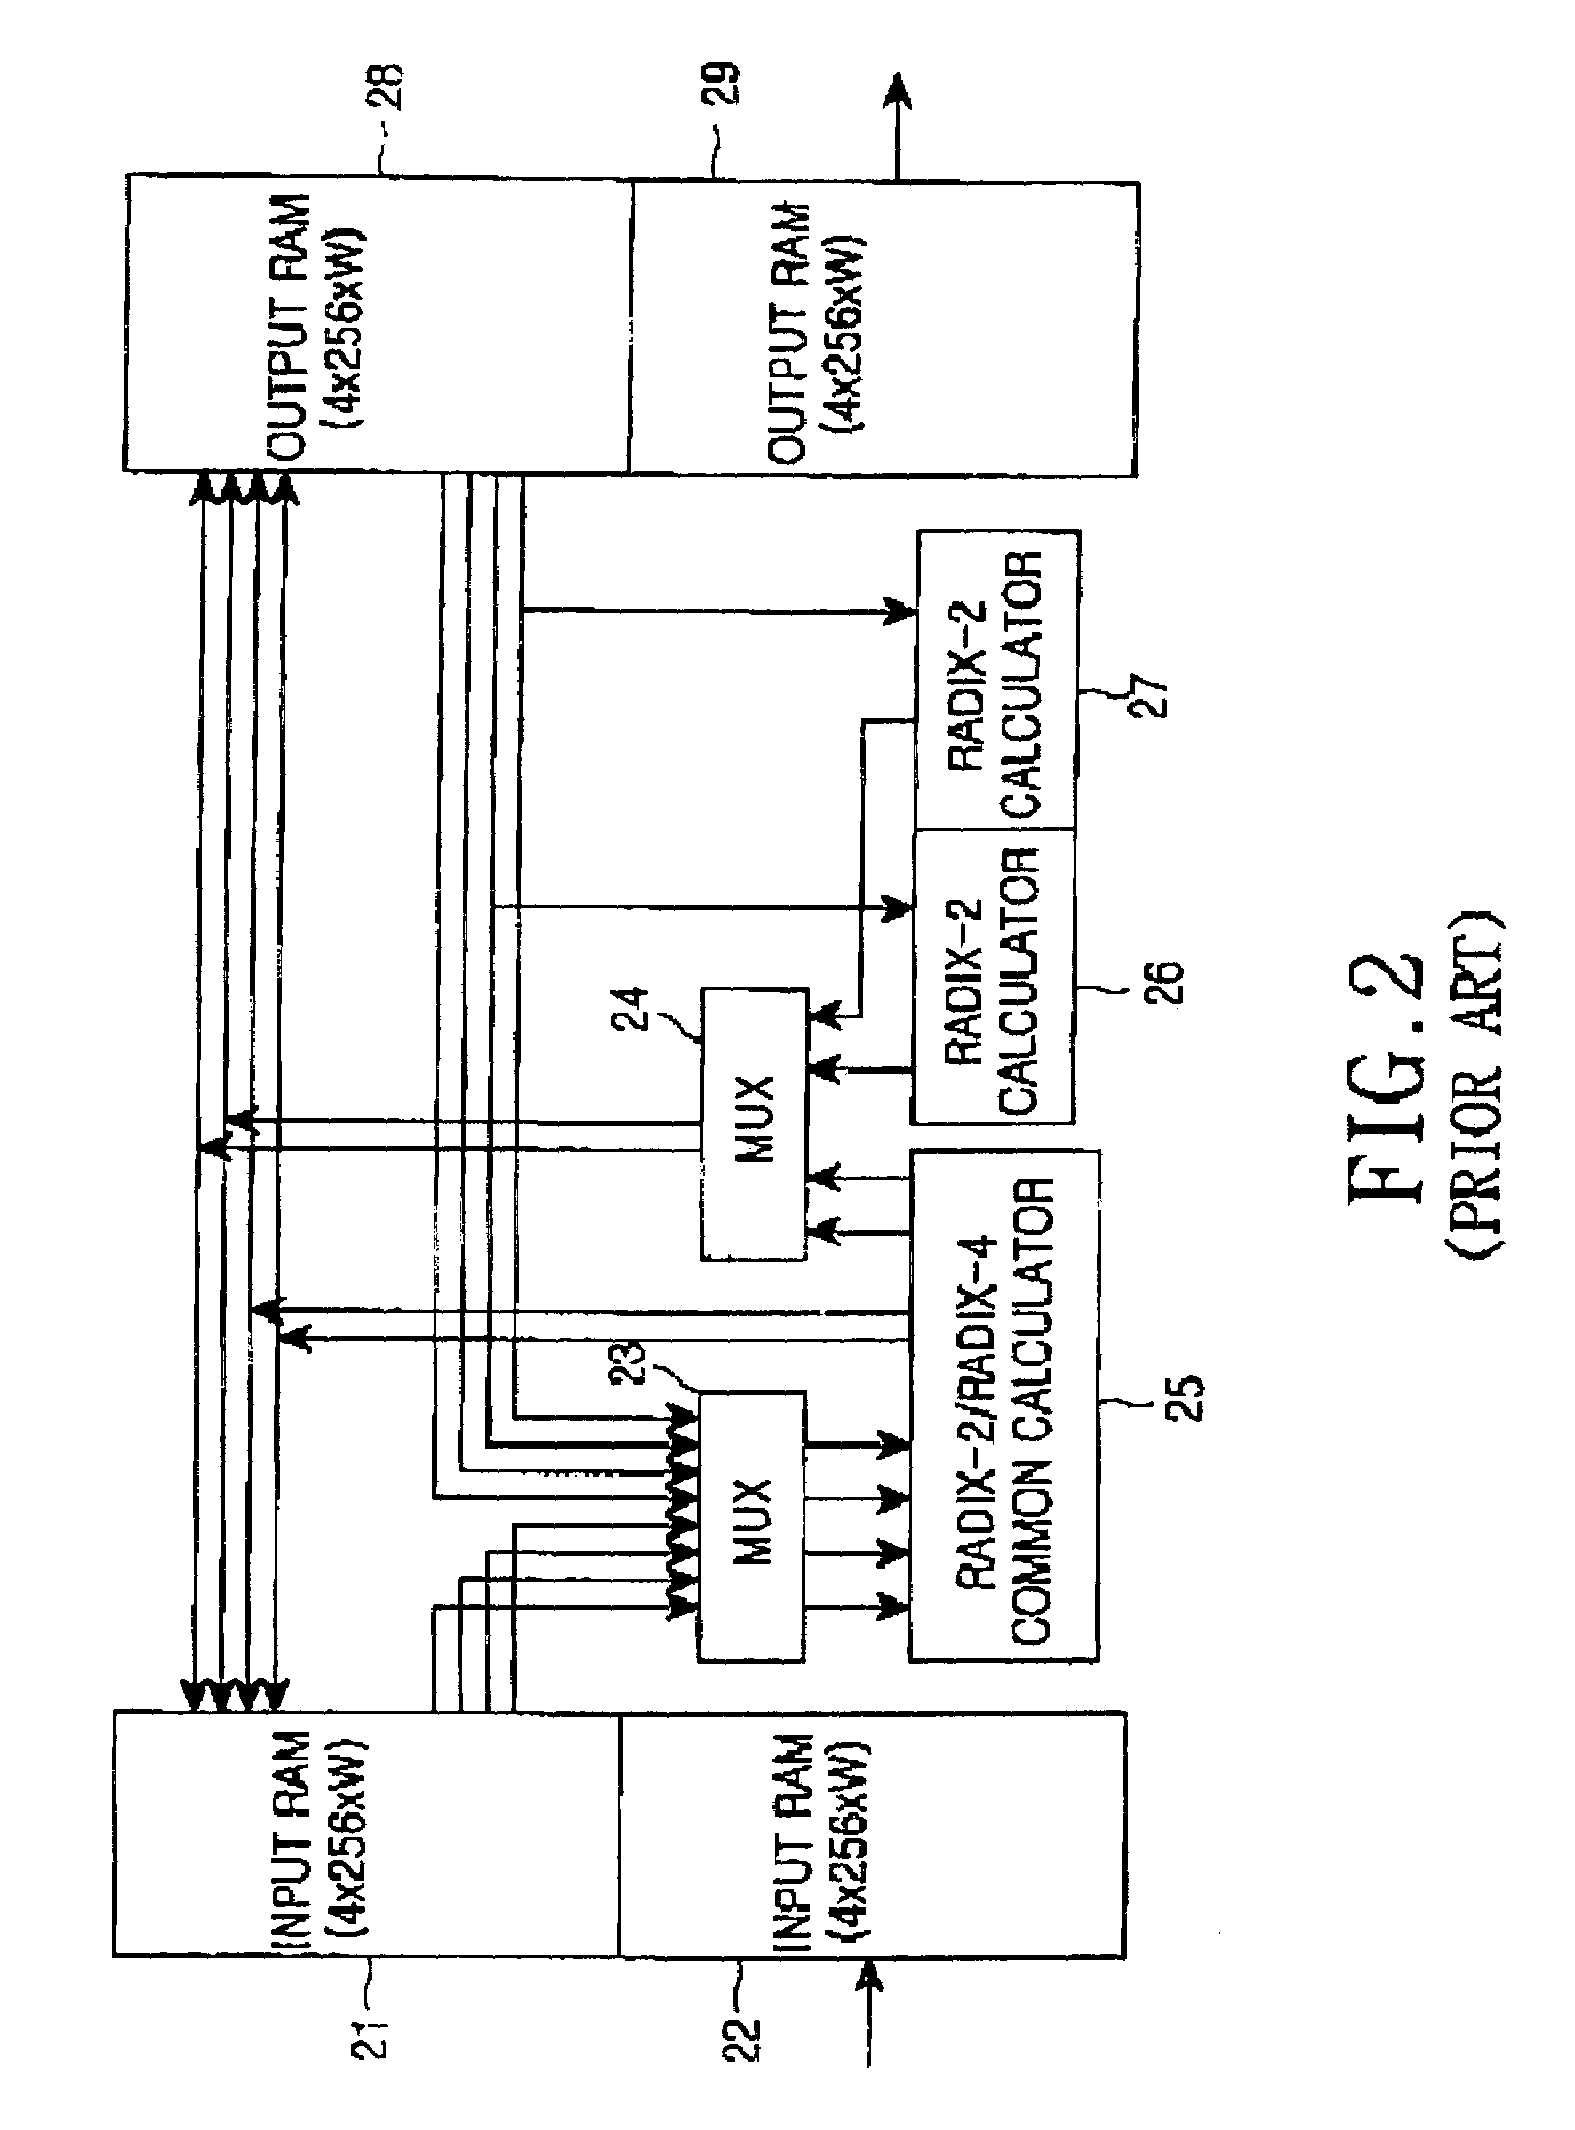 Modulation apparatus using mixed-radix fast fourier transform